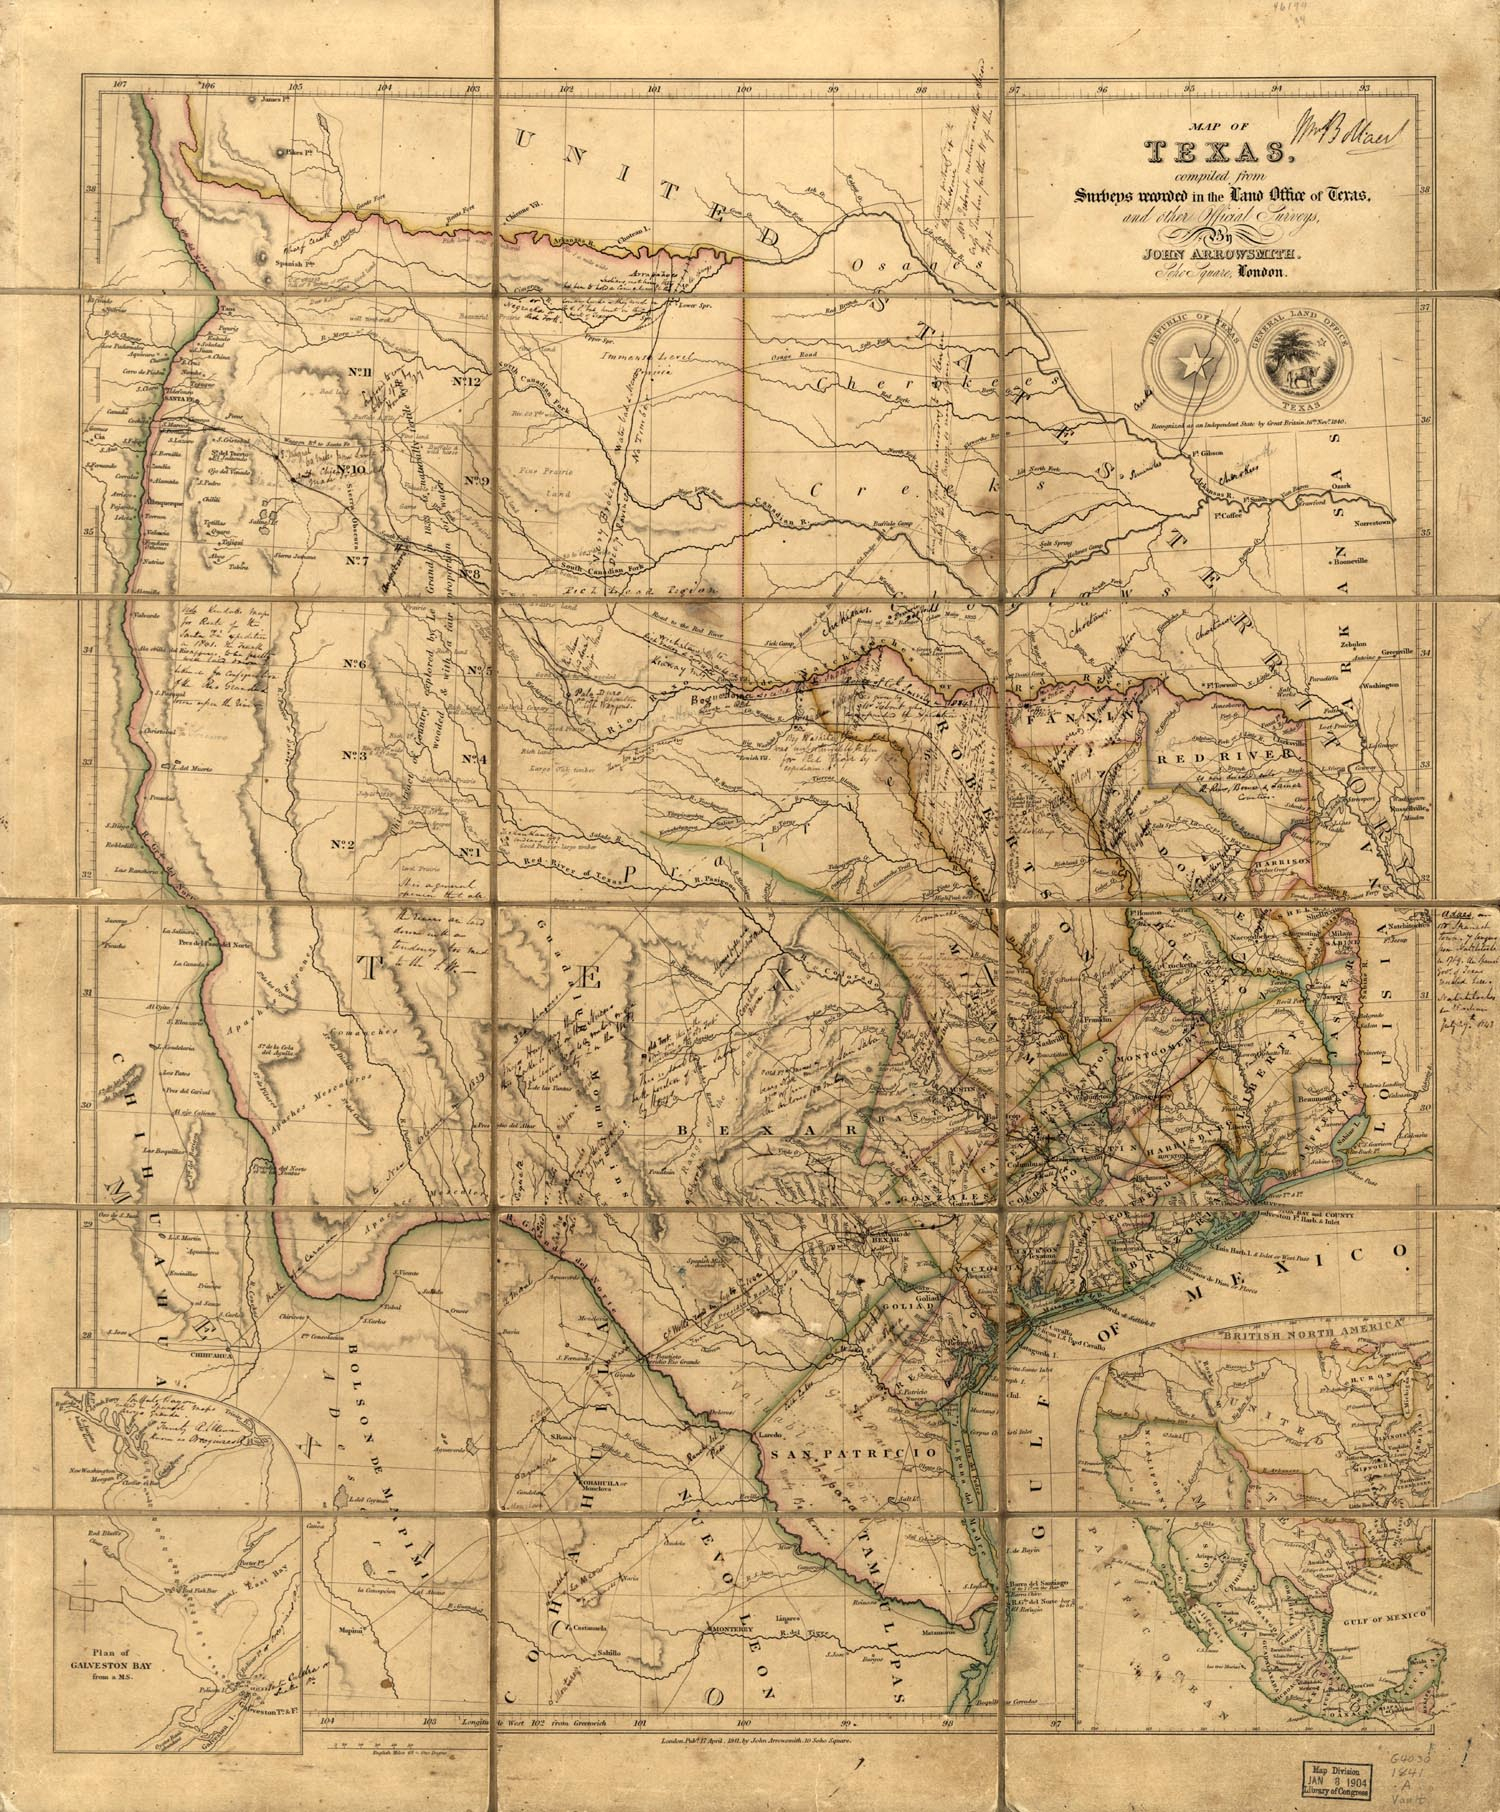 Maps Of The Republic Of Texas - Texas Civil War Map